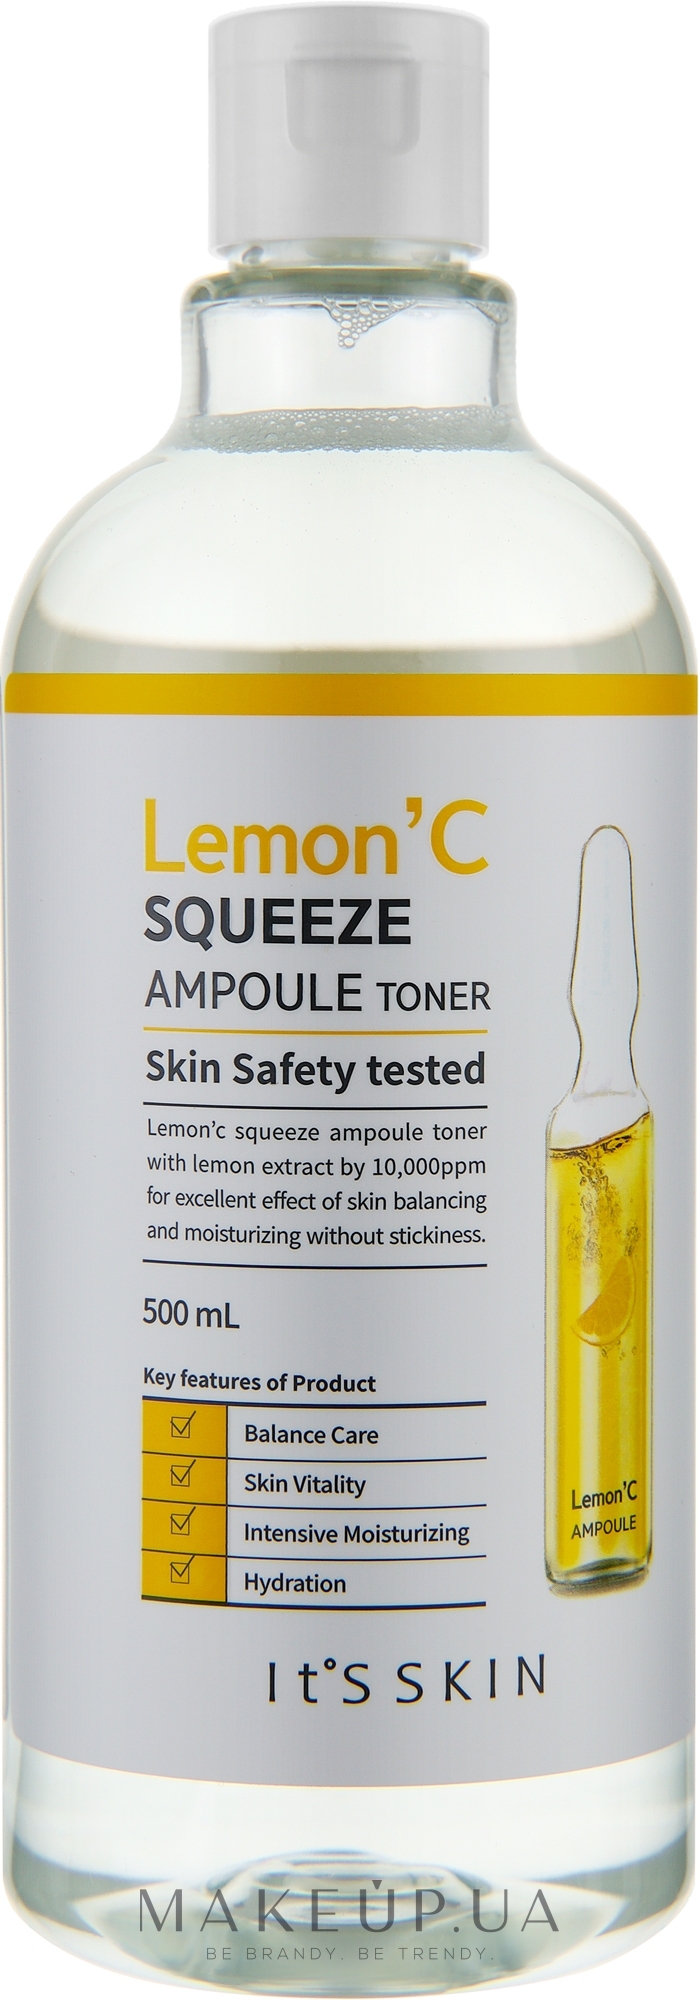 Тоник для лица с экстрактом лимона - It's Skin Lemon' C Squeeze Ampoule Toner  — фото 500ml